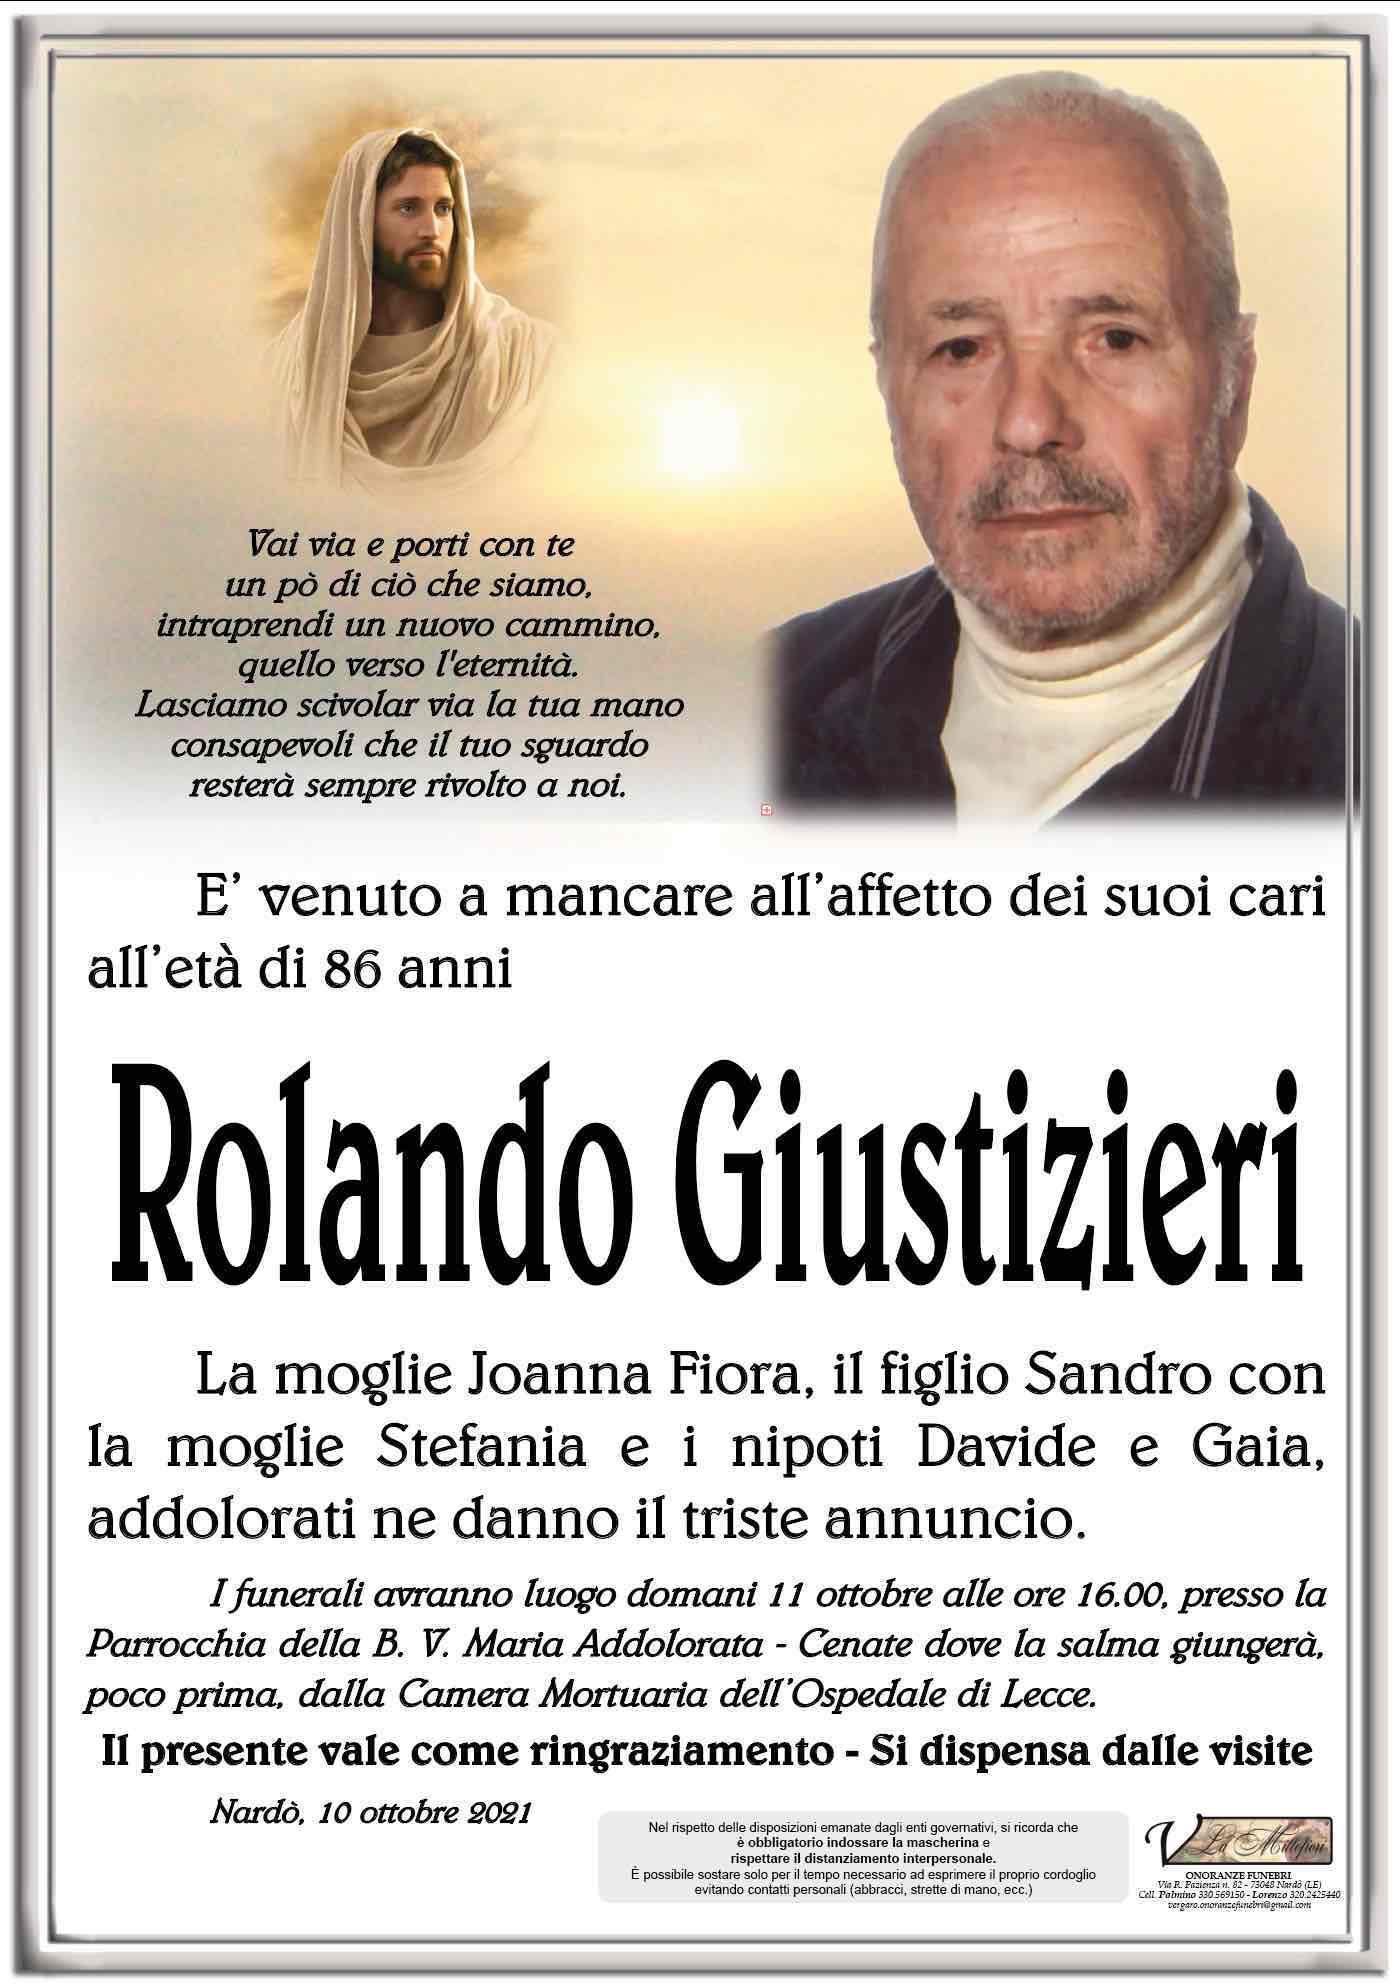 Rolando Giustizieri